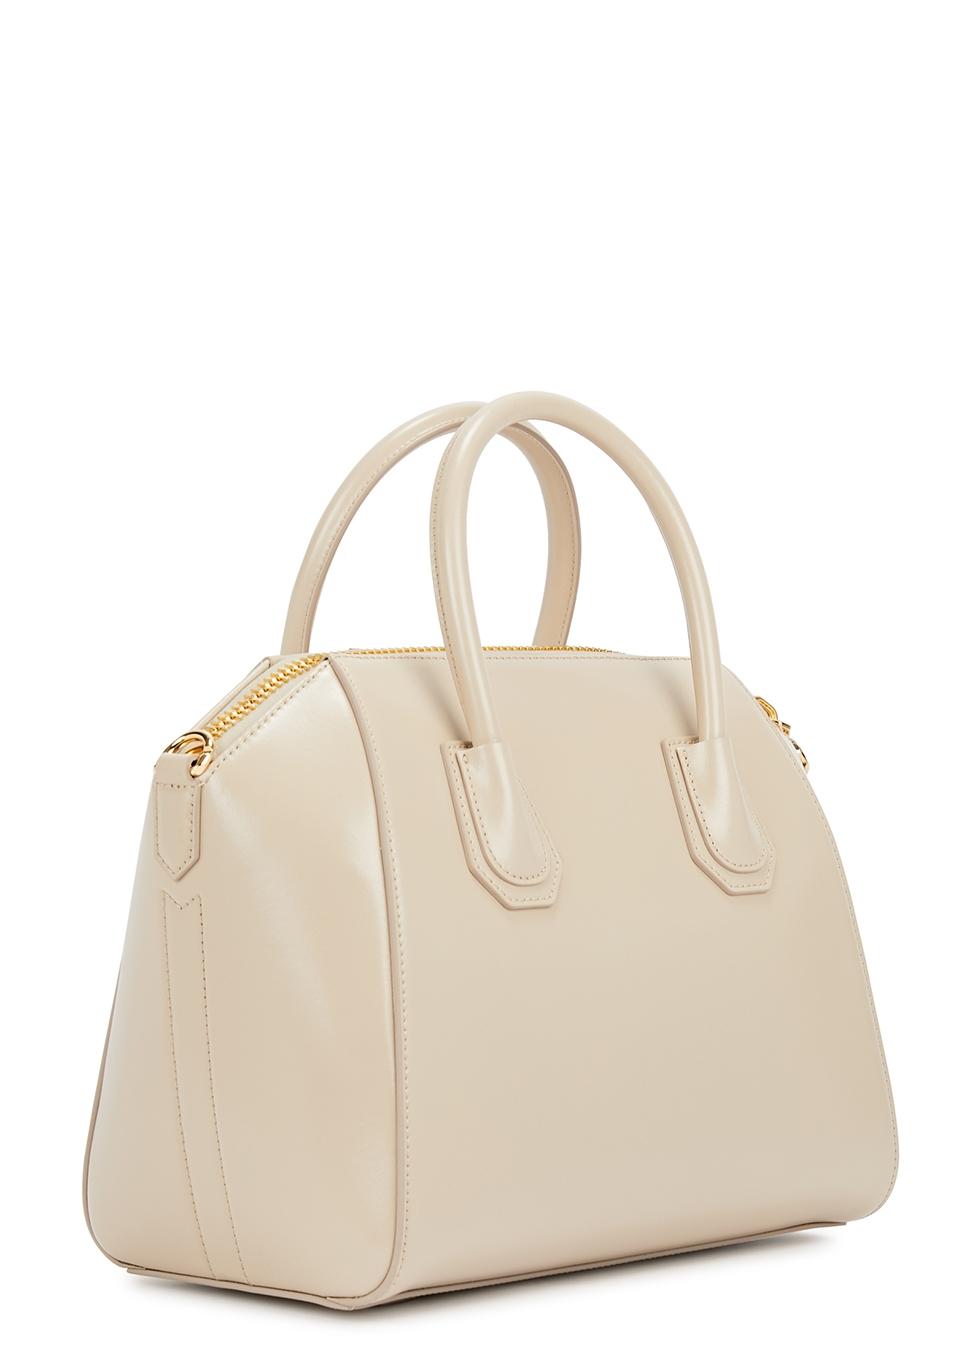 Givenchy Mini Antigona Top-Handle Bag in Leather